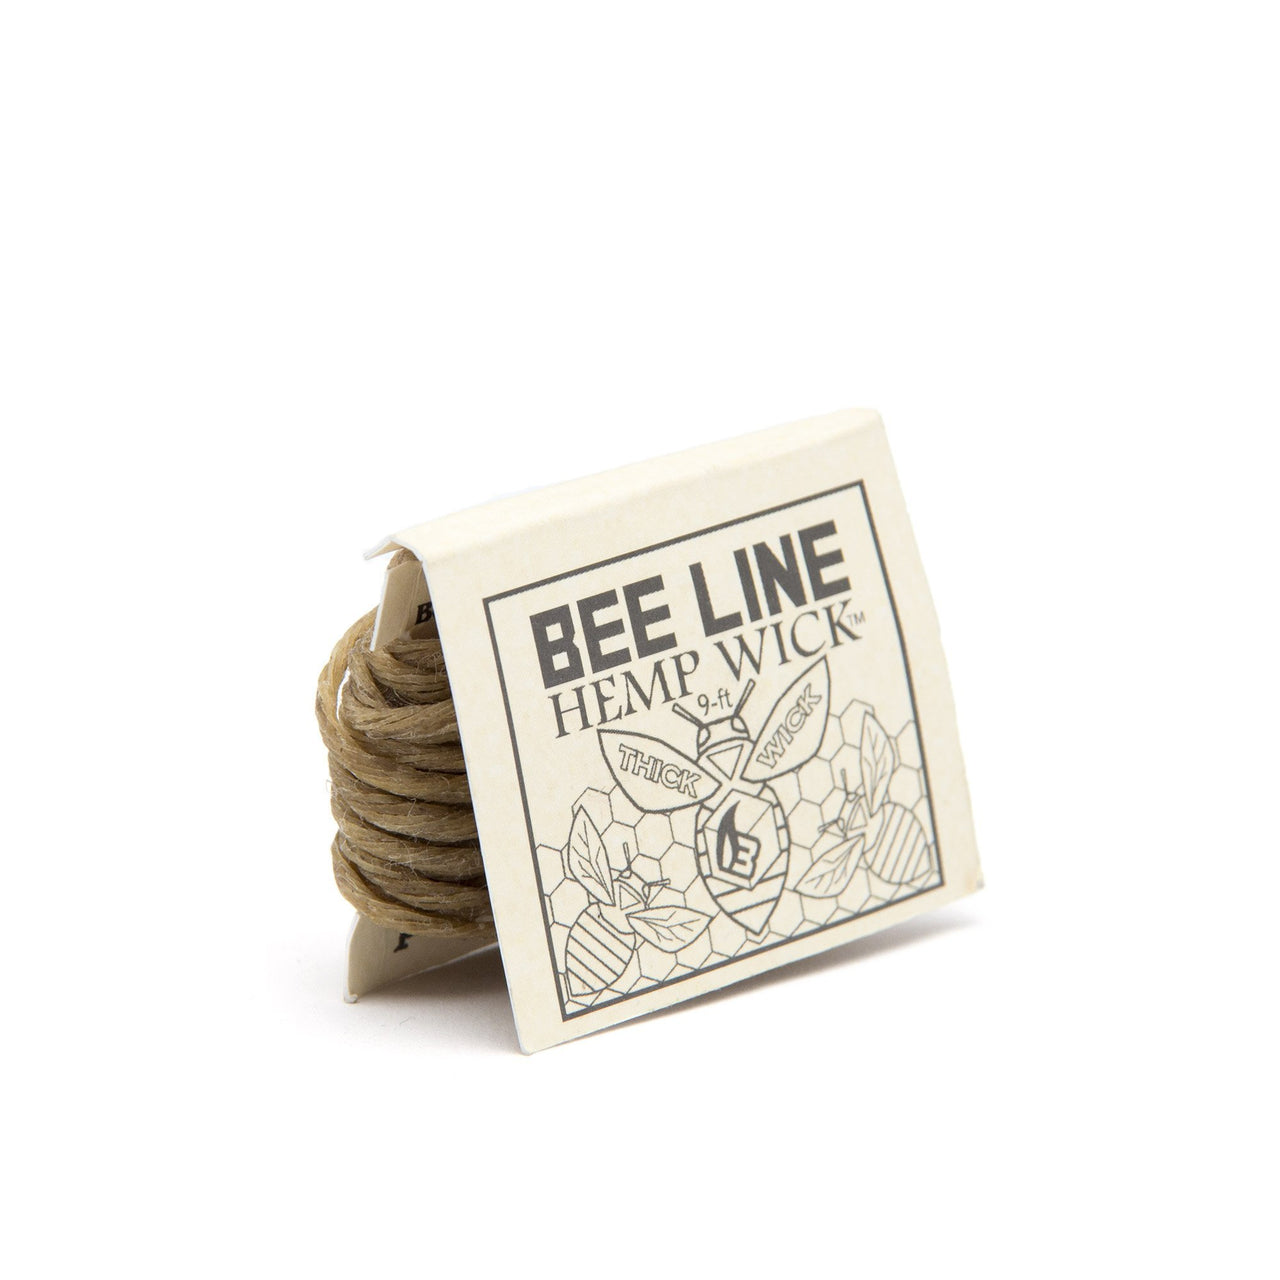  Hemp Wick Bundle Pack: 200 FT Beeline Hemp Roll + 1